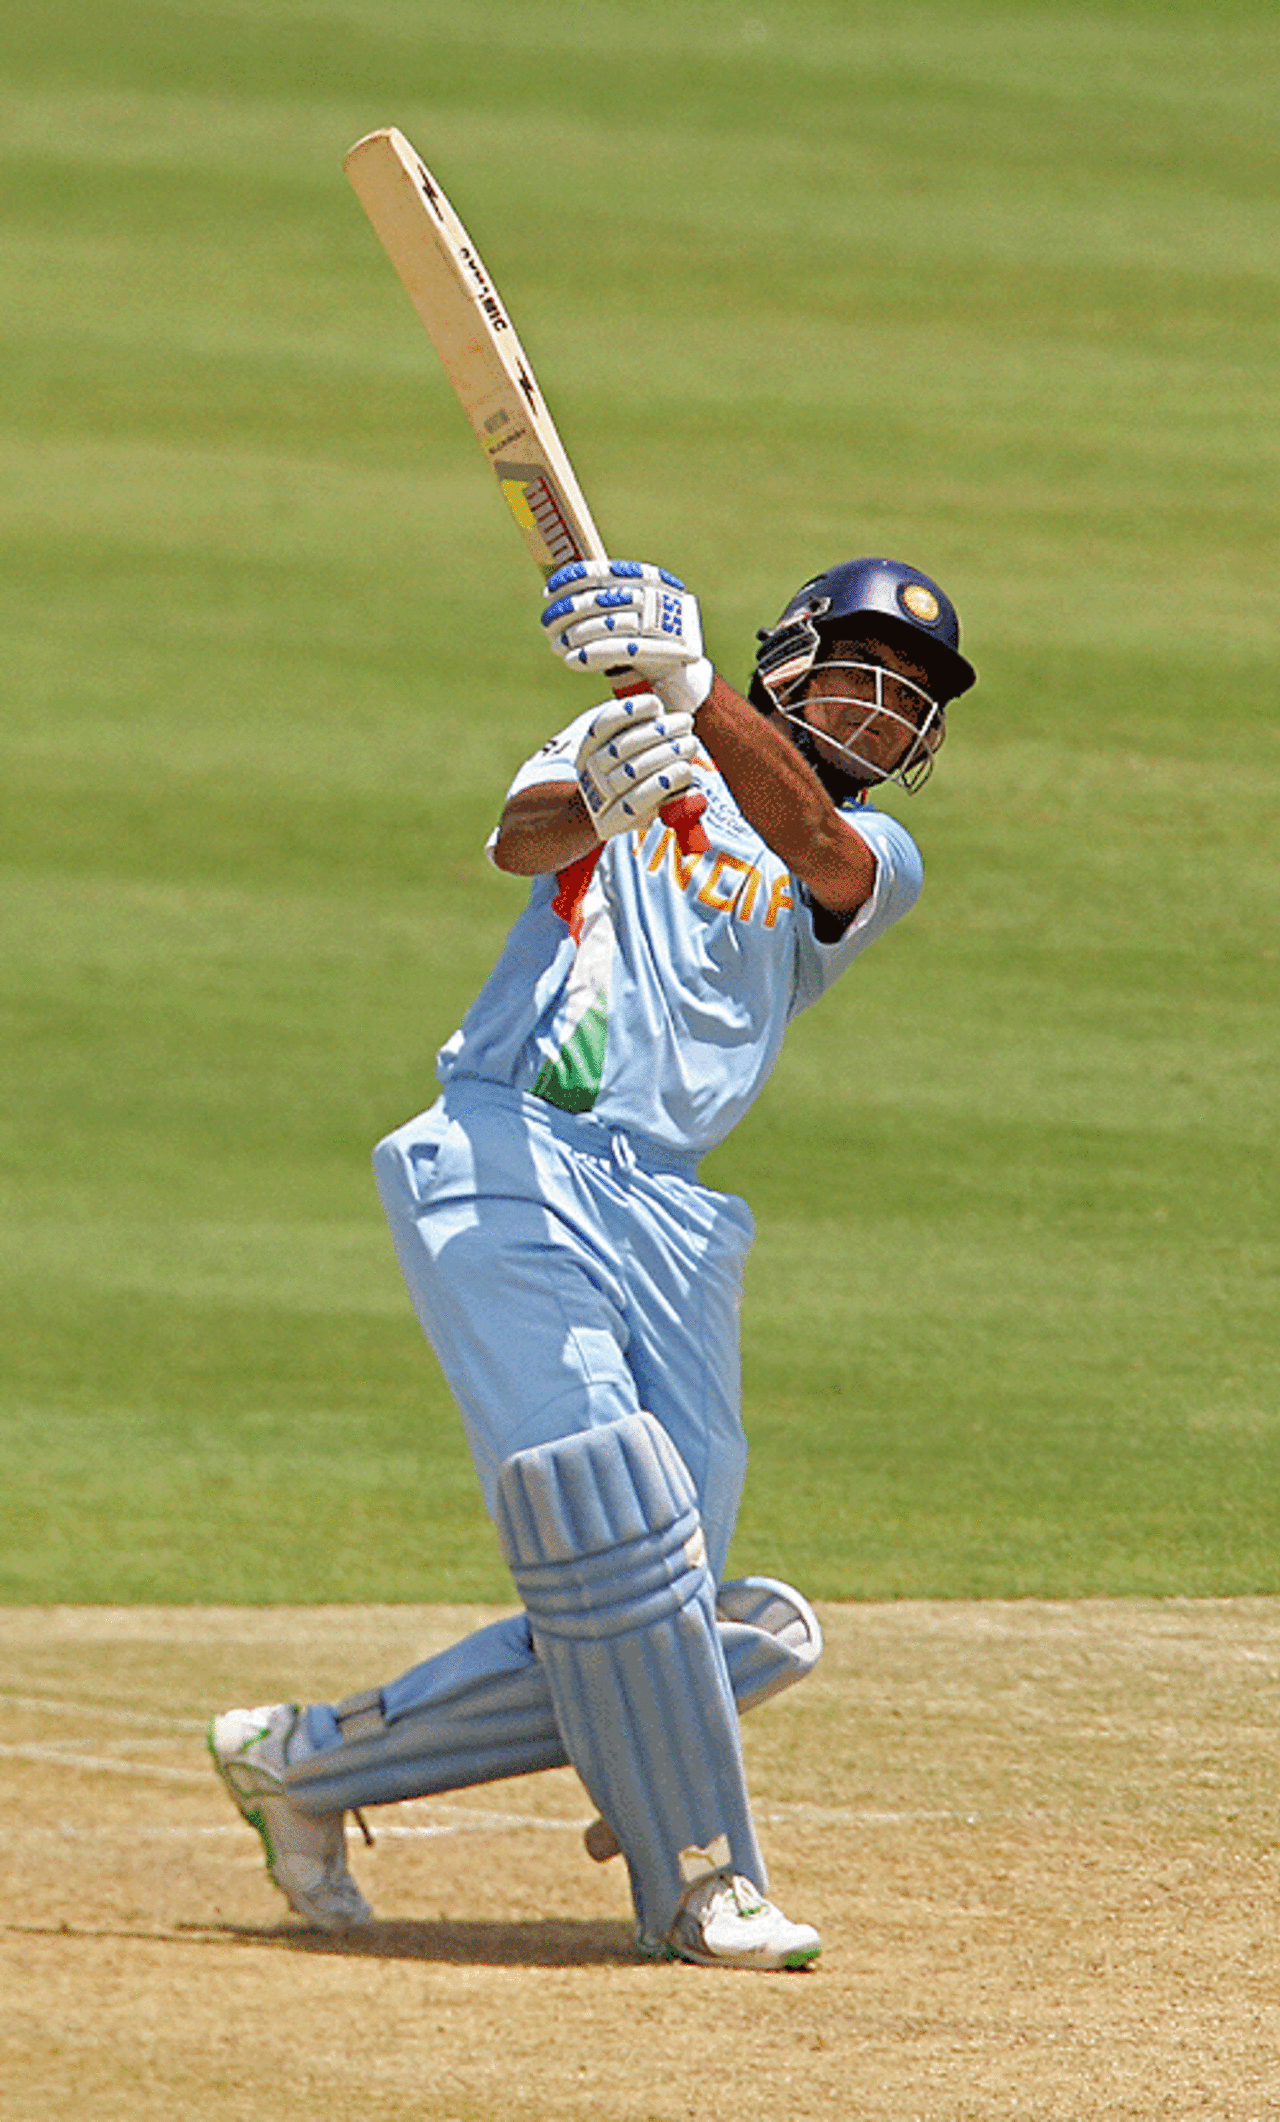 Sourav Ganguly heaves one high over long off, Bangladesh v India, Trinidad, March 17, 2007